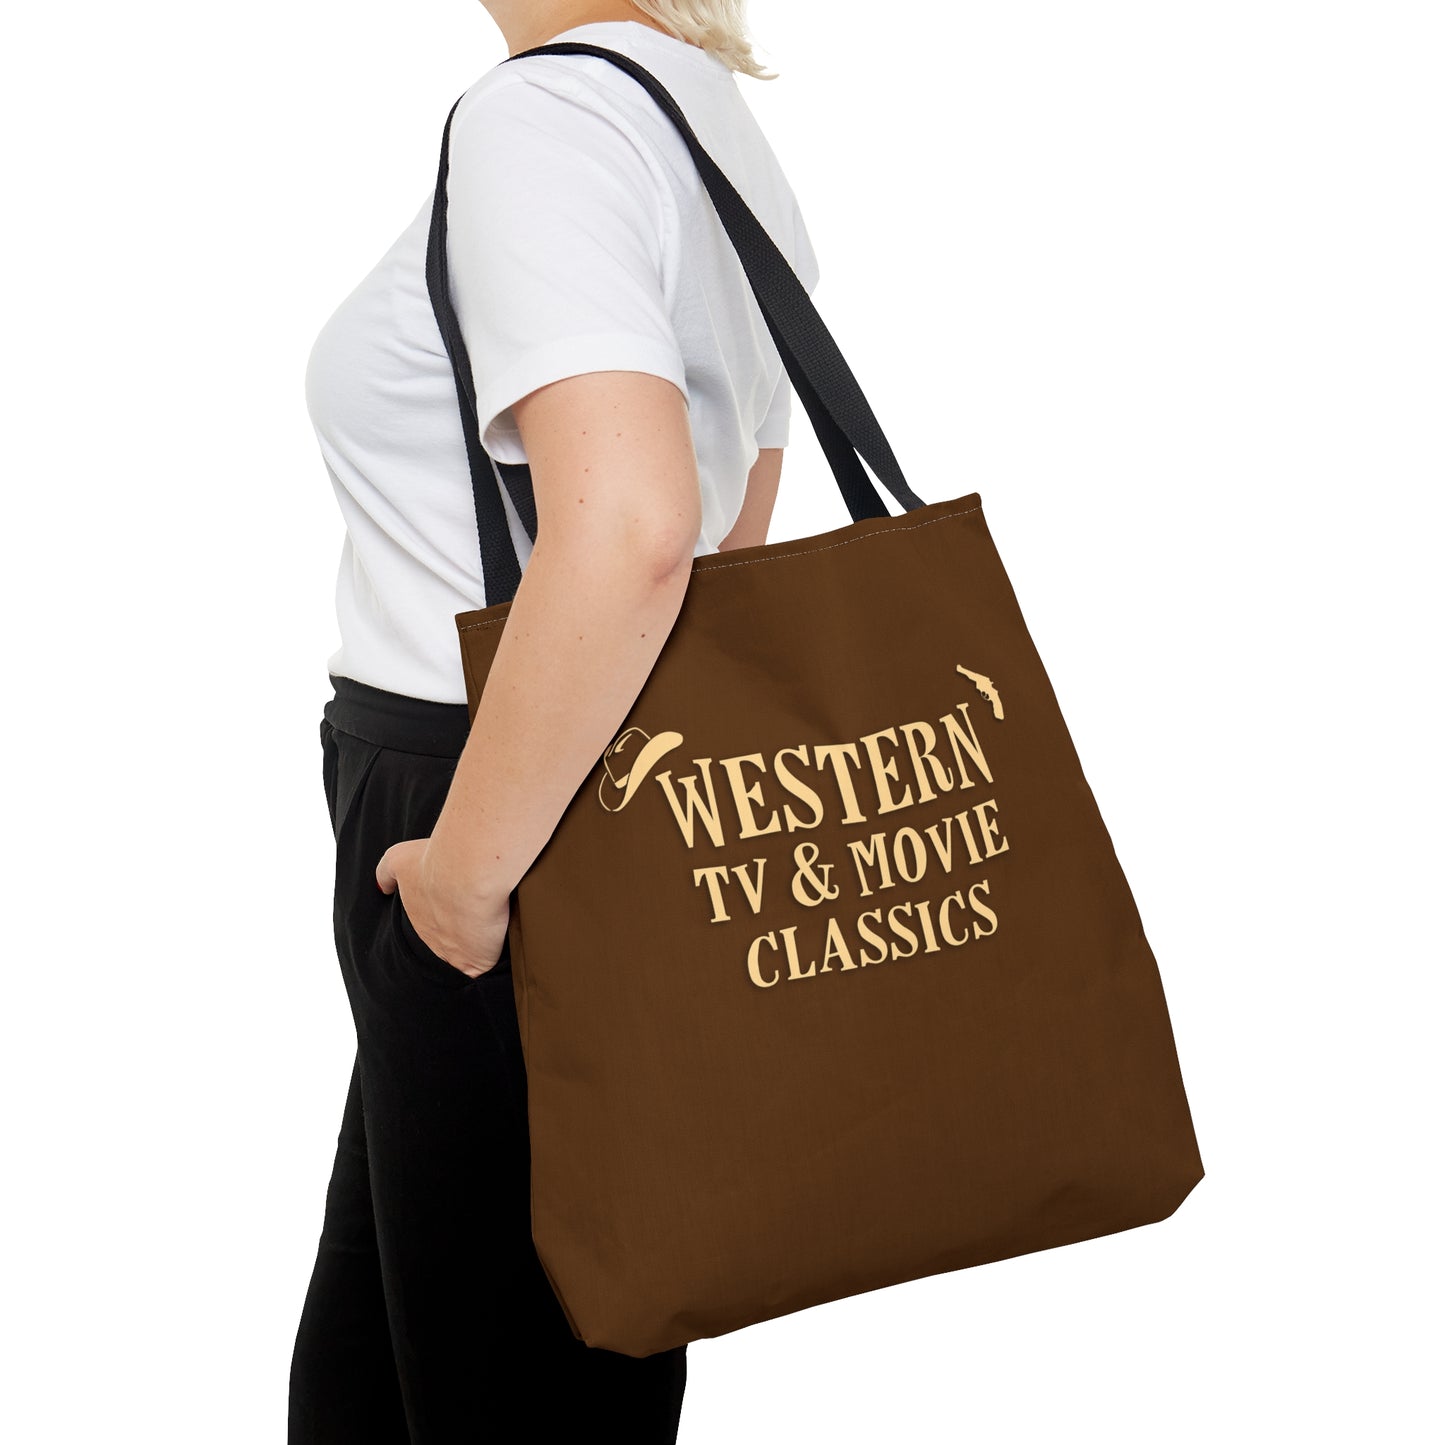 Western TV & Movie Classics Brown Tote Bag (AOP)